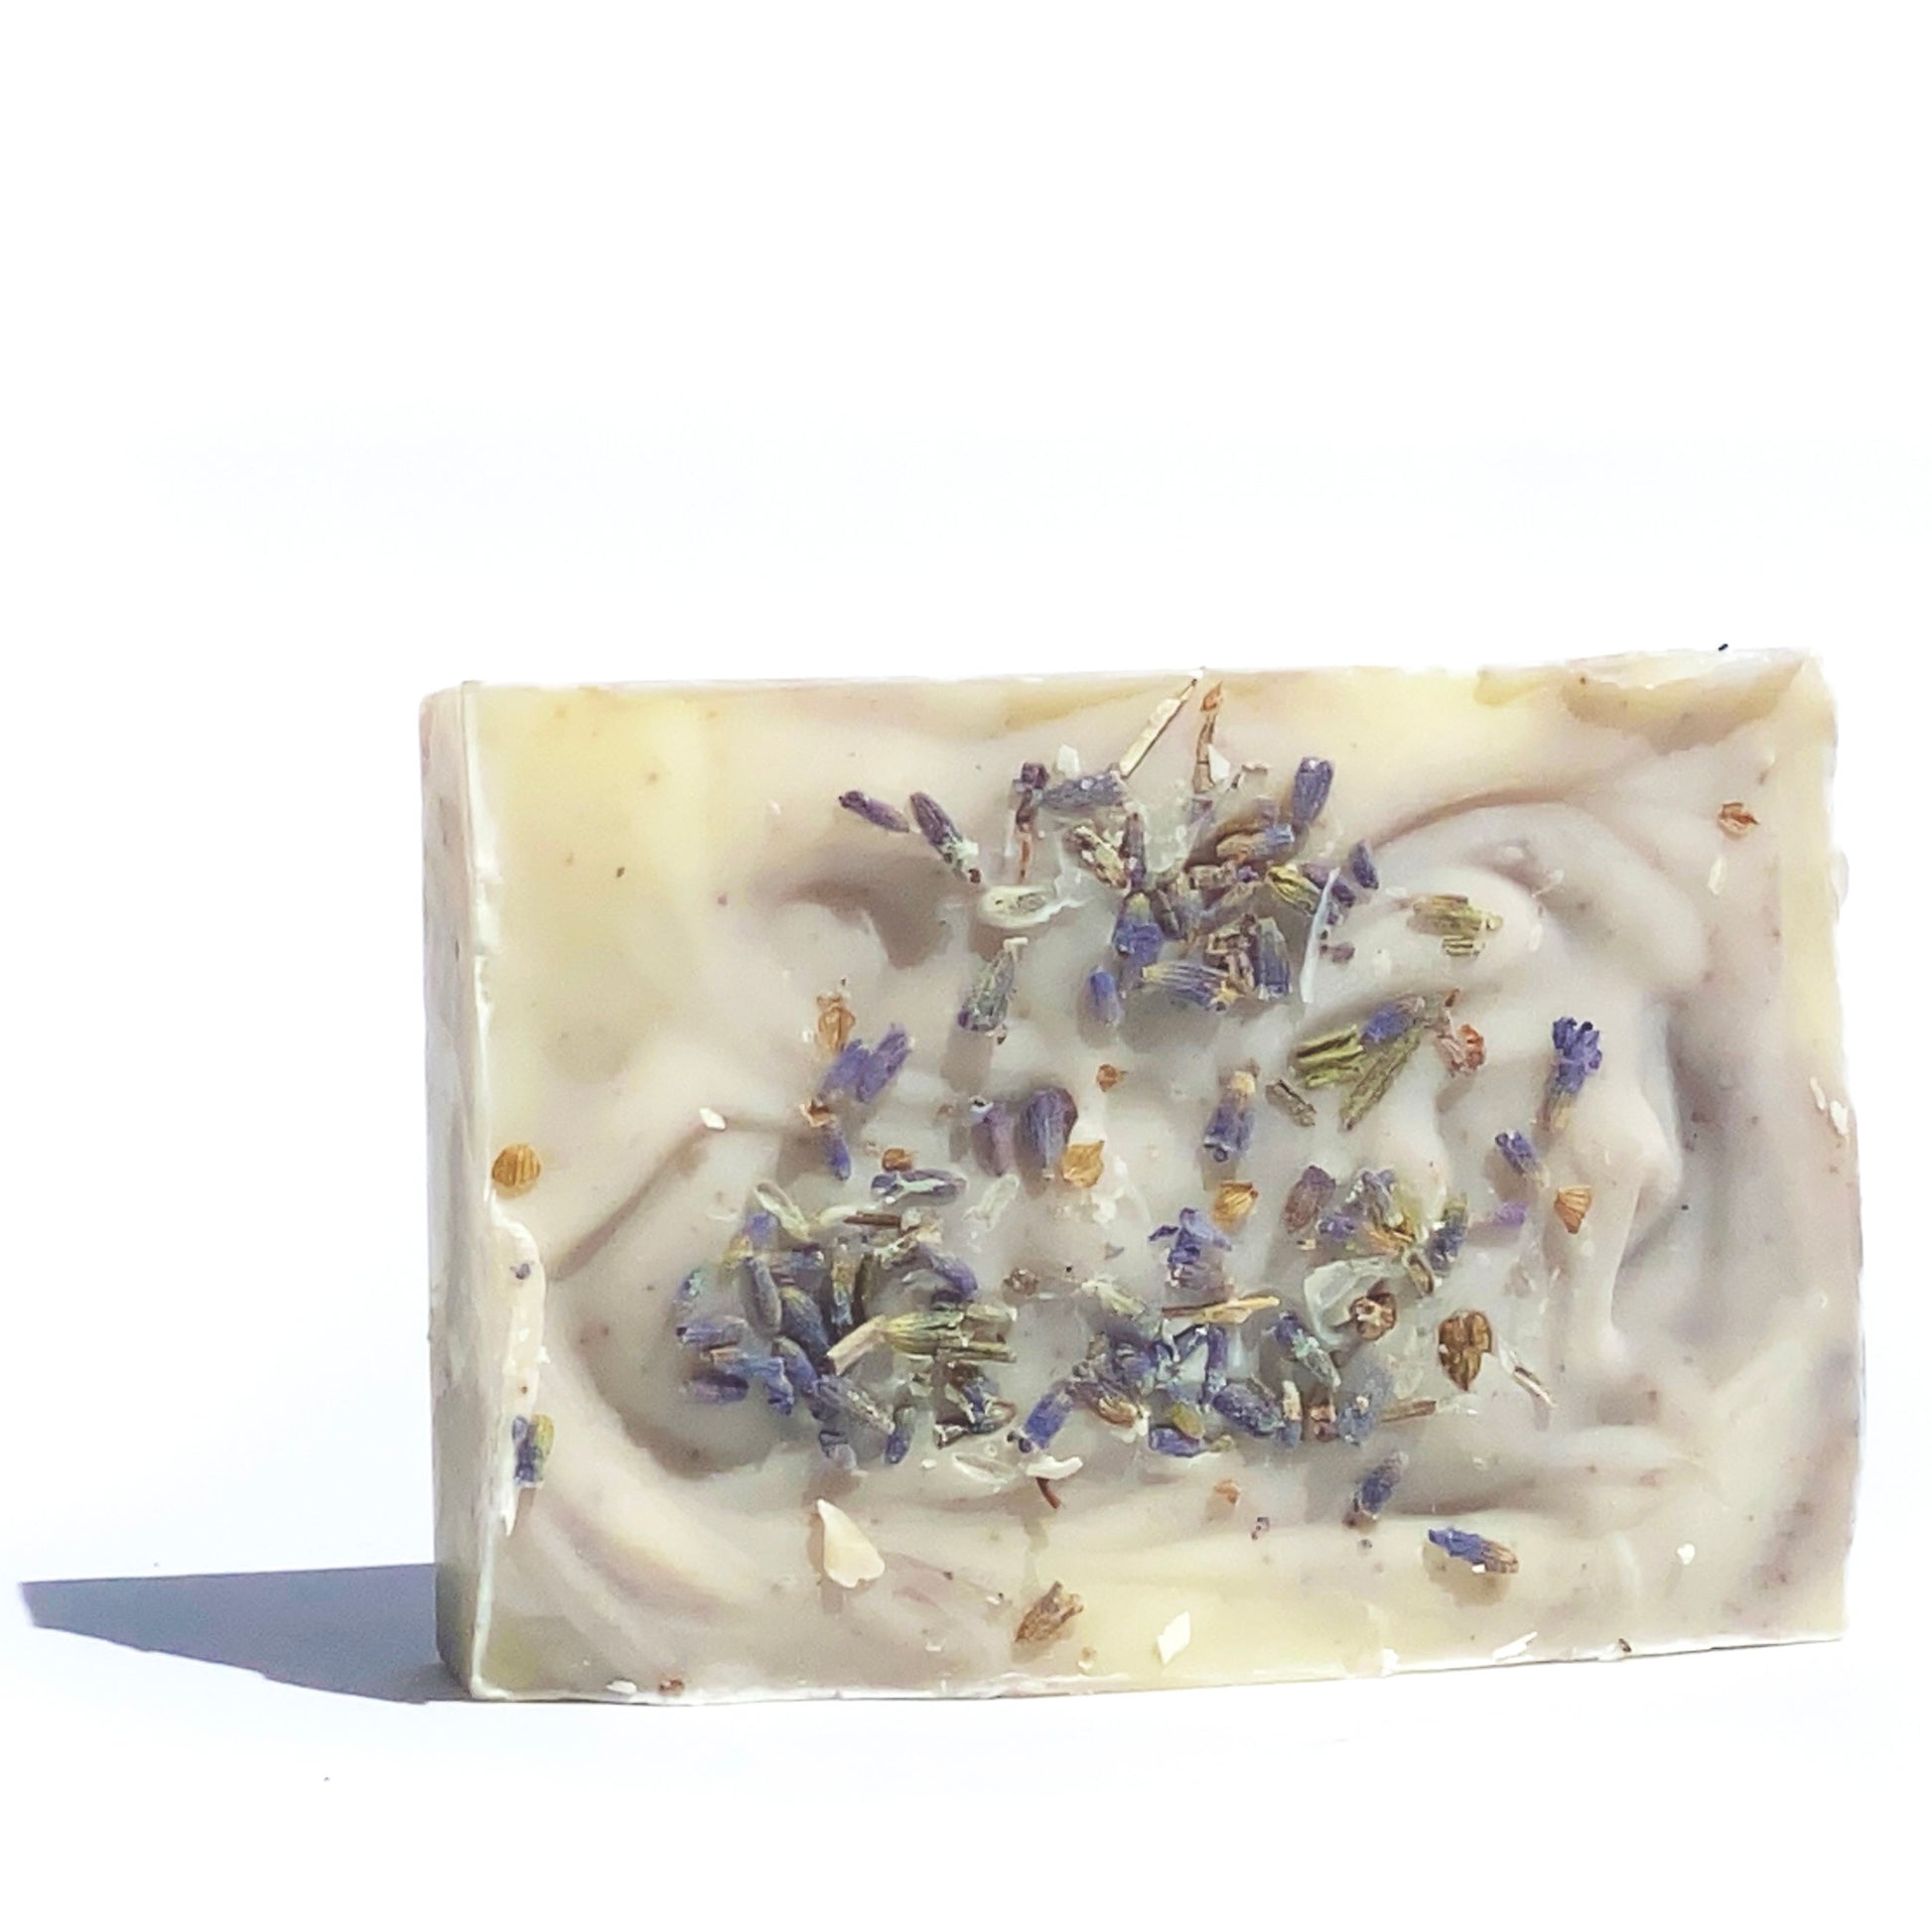 By Valenti Organics Lavender Almond Natural Soap Bar for Dermatitis